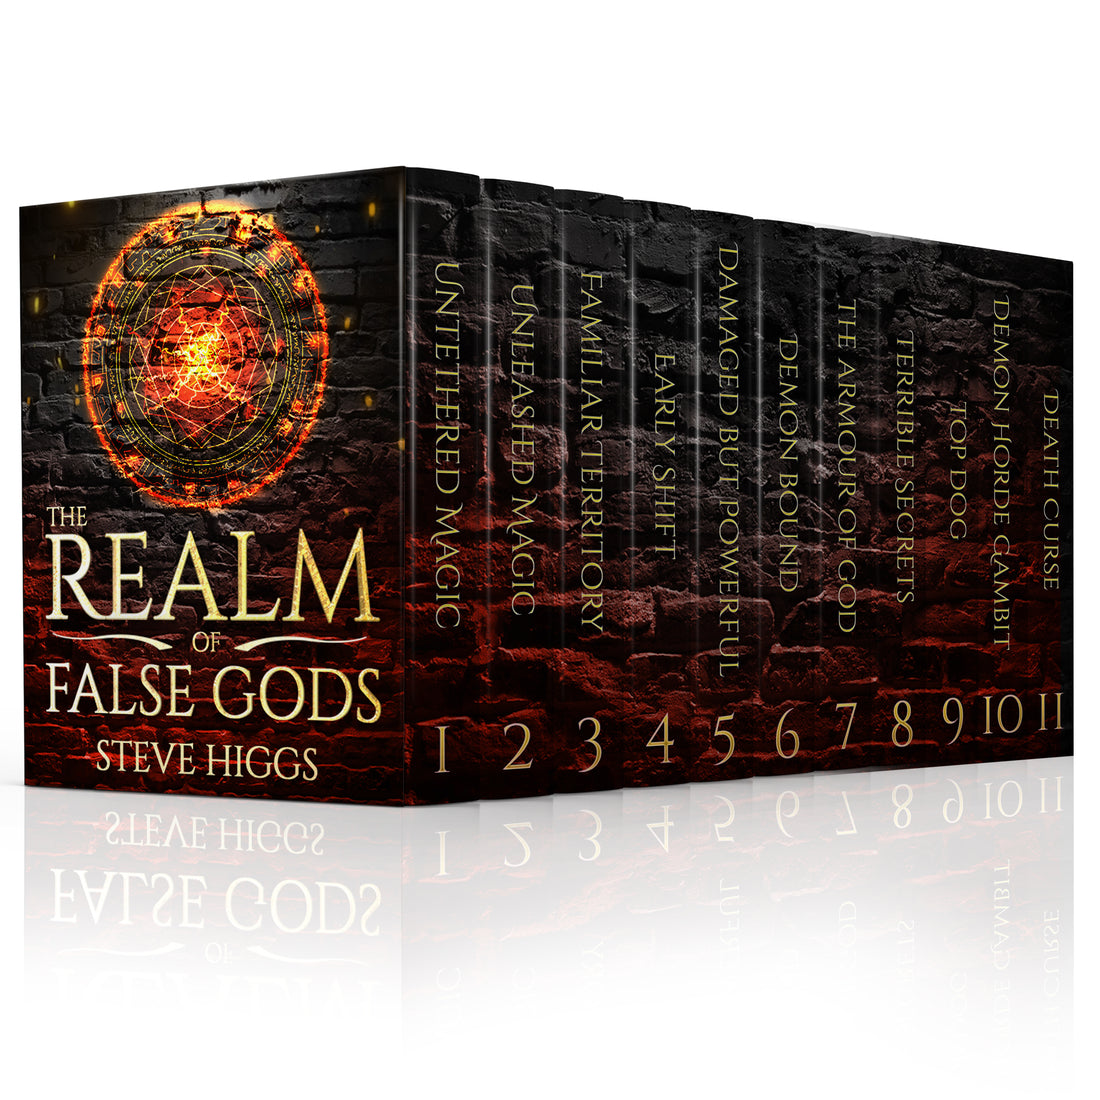 Death Curse: The Final Battle : The Realm of False Gods Book 11